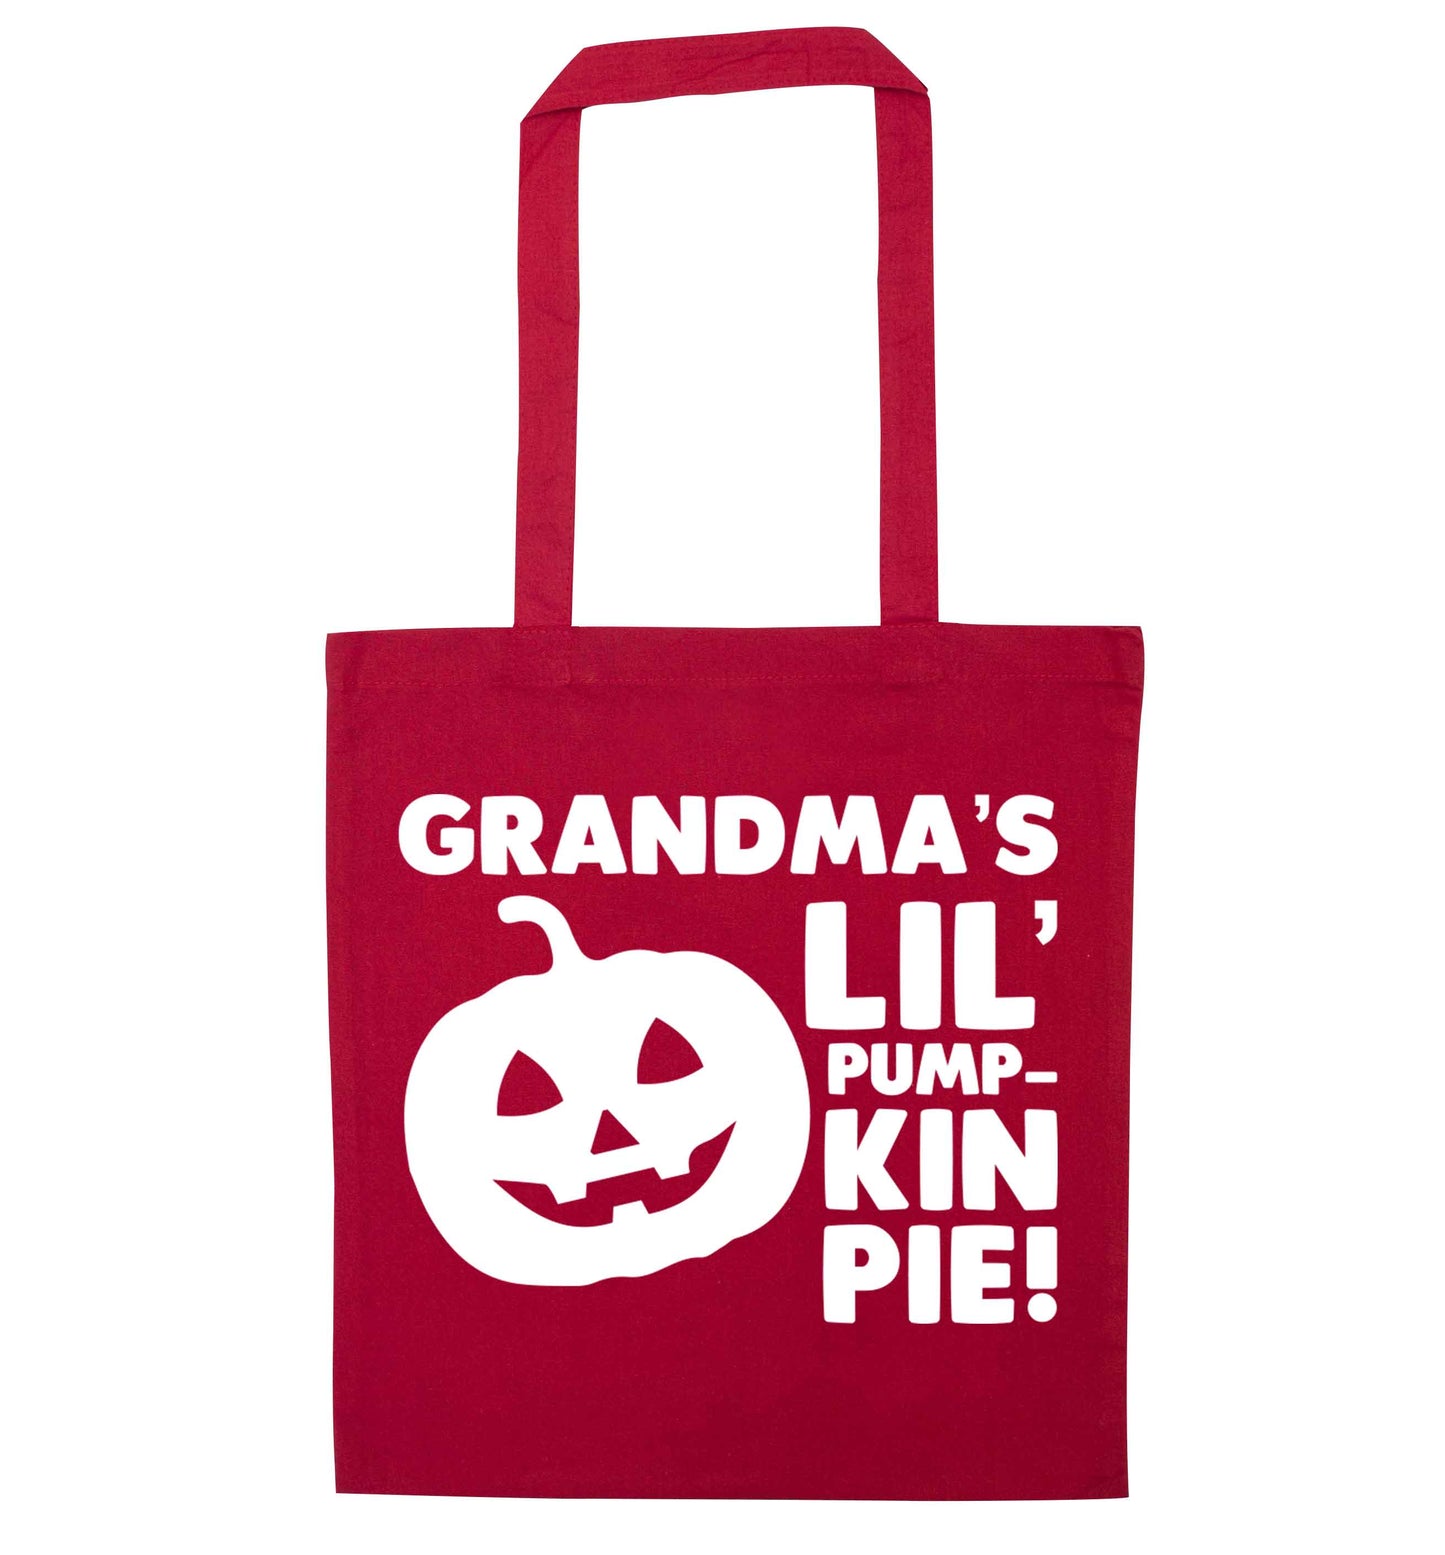 Grandma's lil' pumpkin pie red tote bag